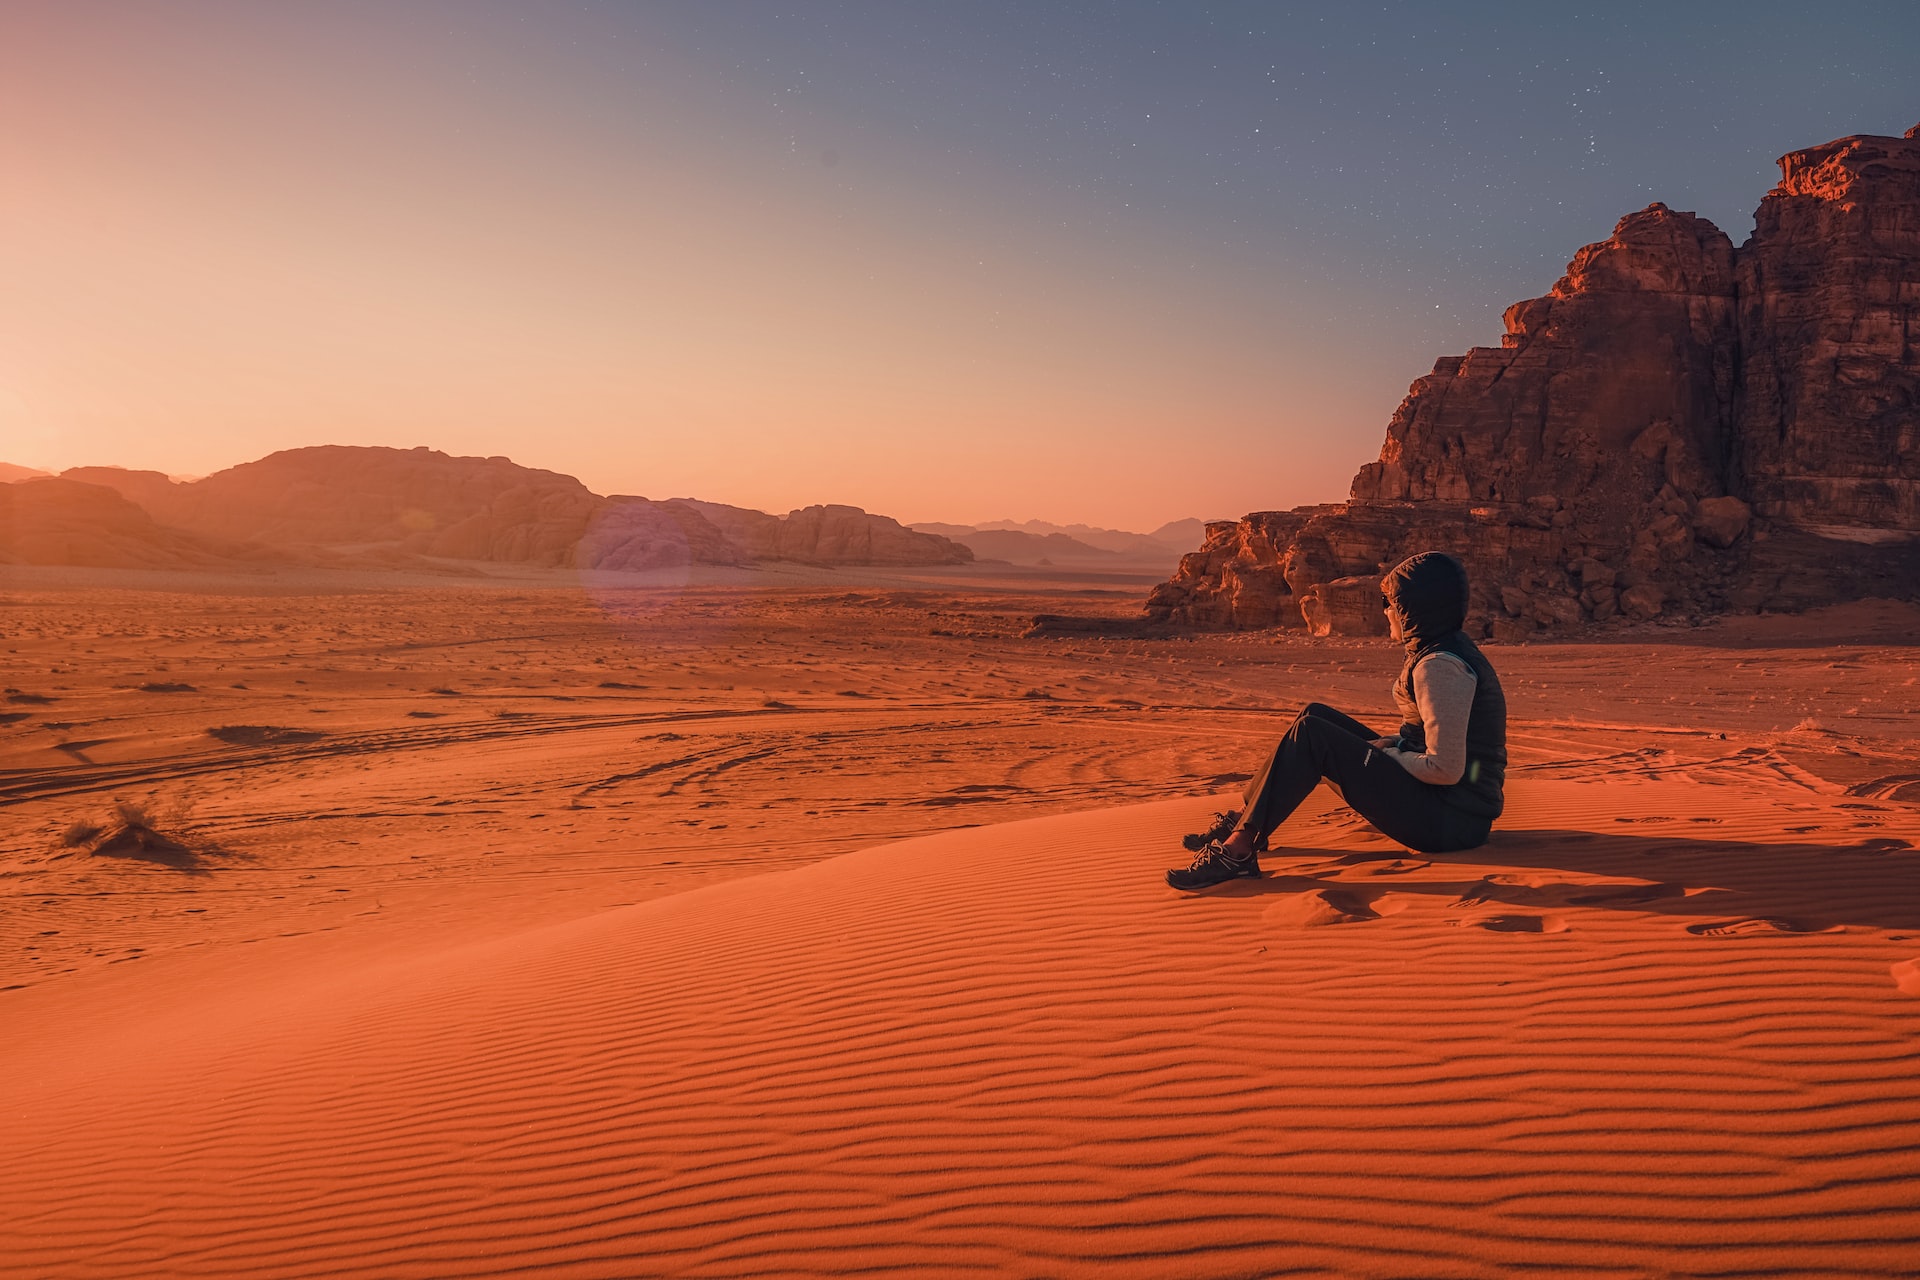 Movies Filmed in Wadi Rum- The red sands of Wadi Rum